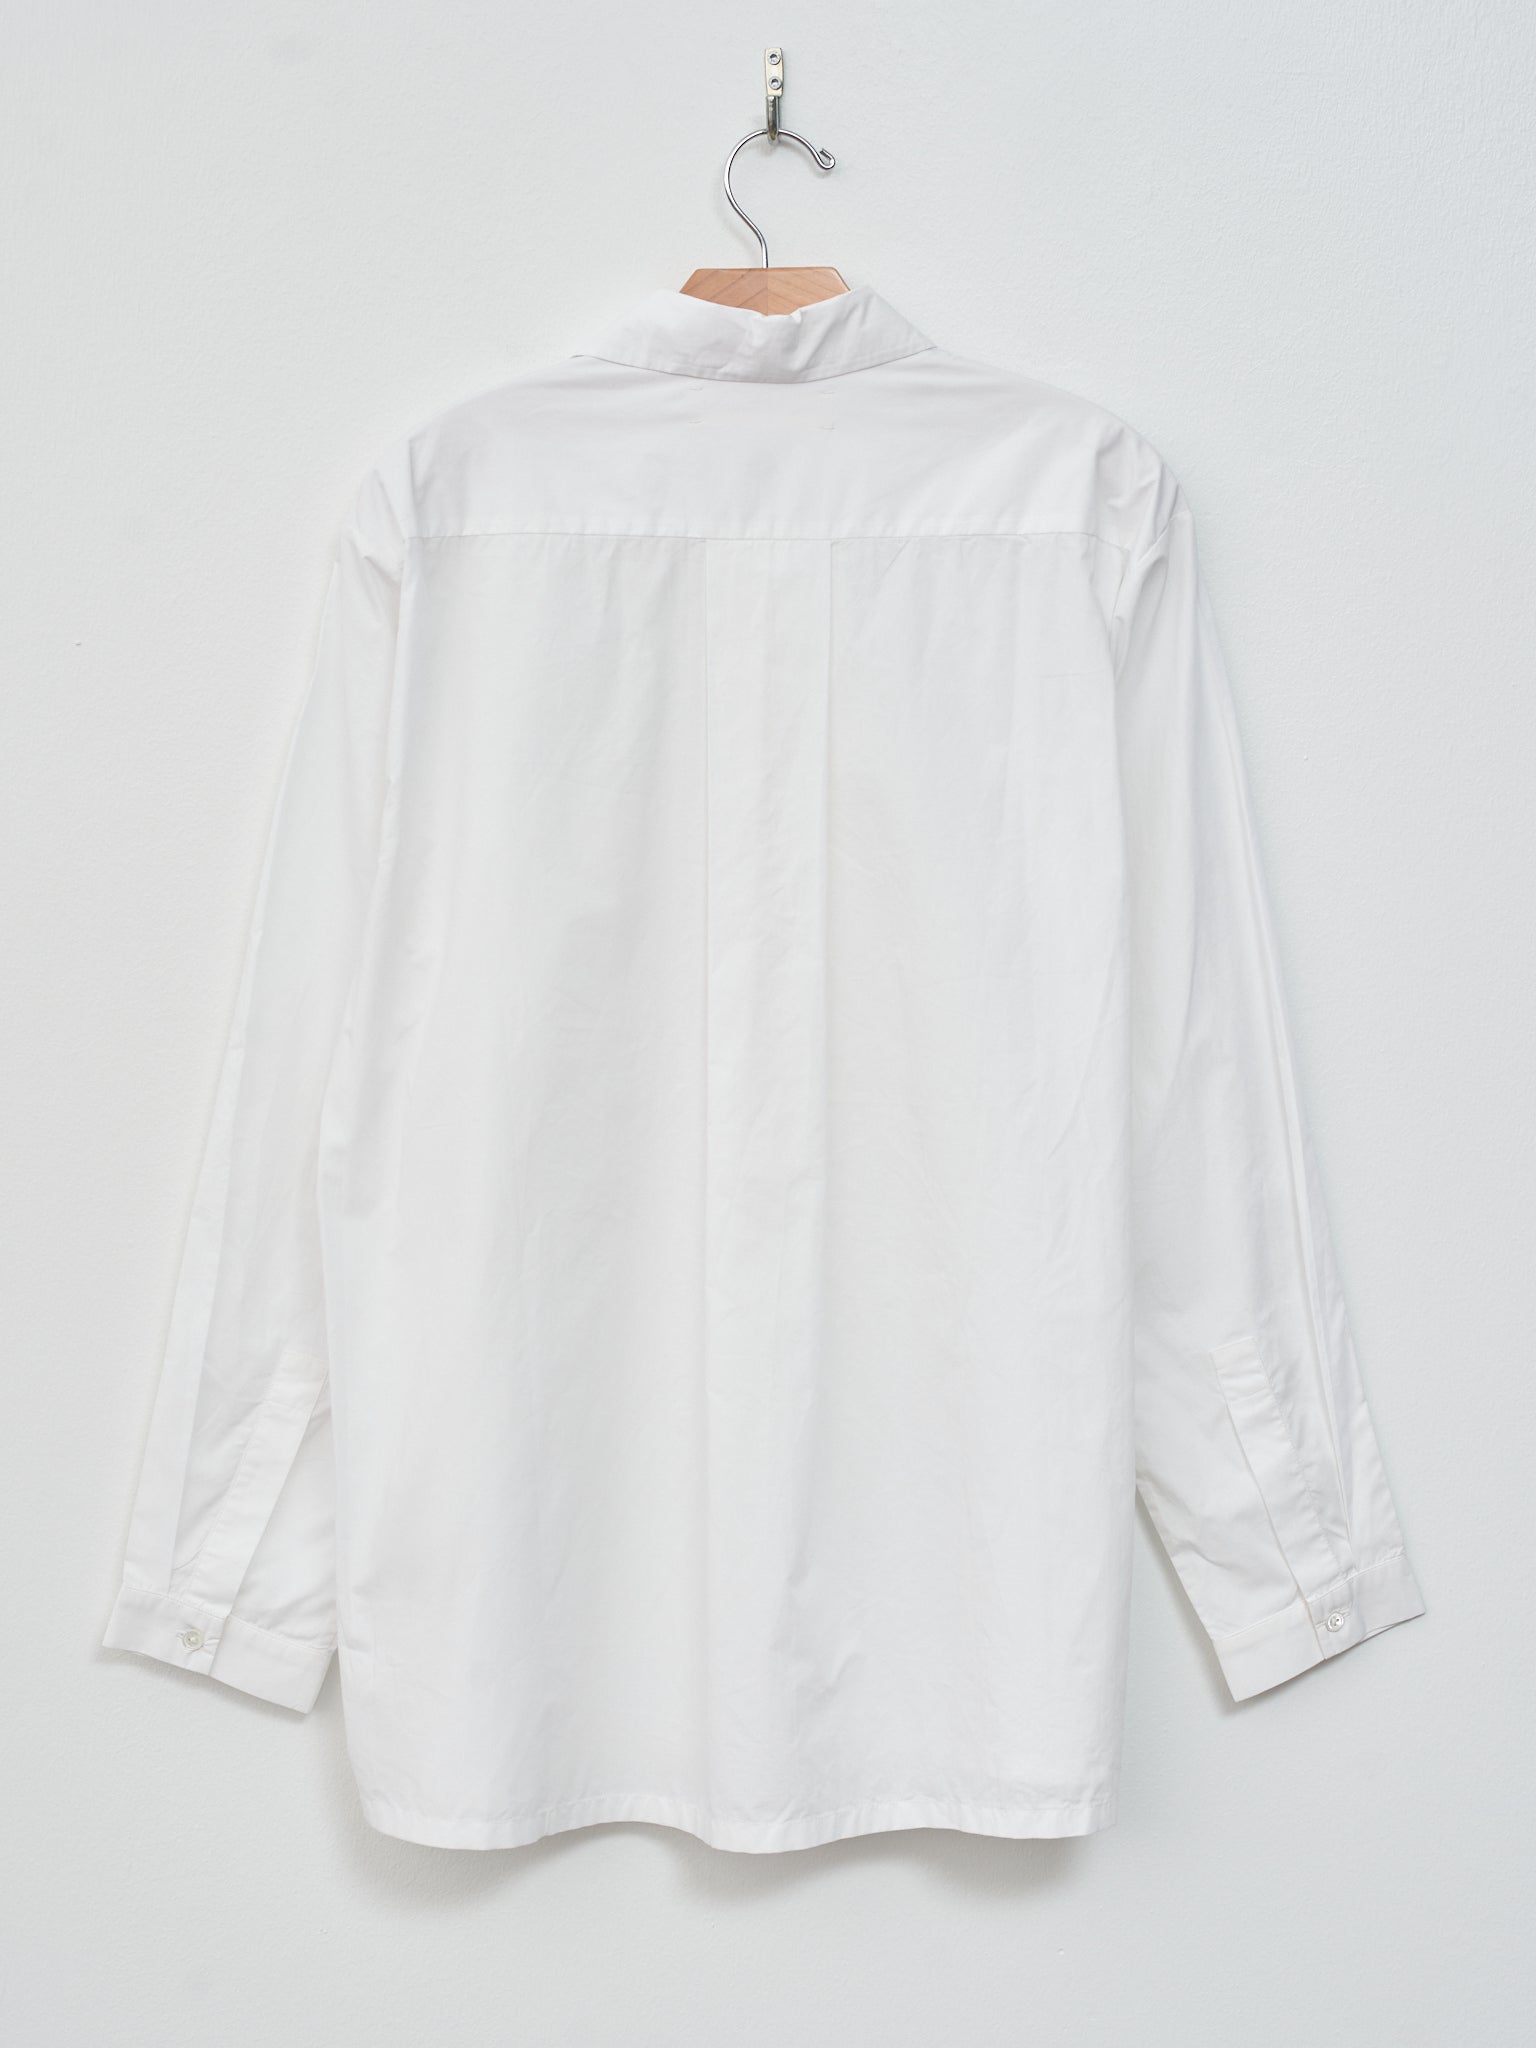 Namu Shop - Jan Machenhauer Pete Shirt - White